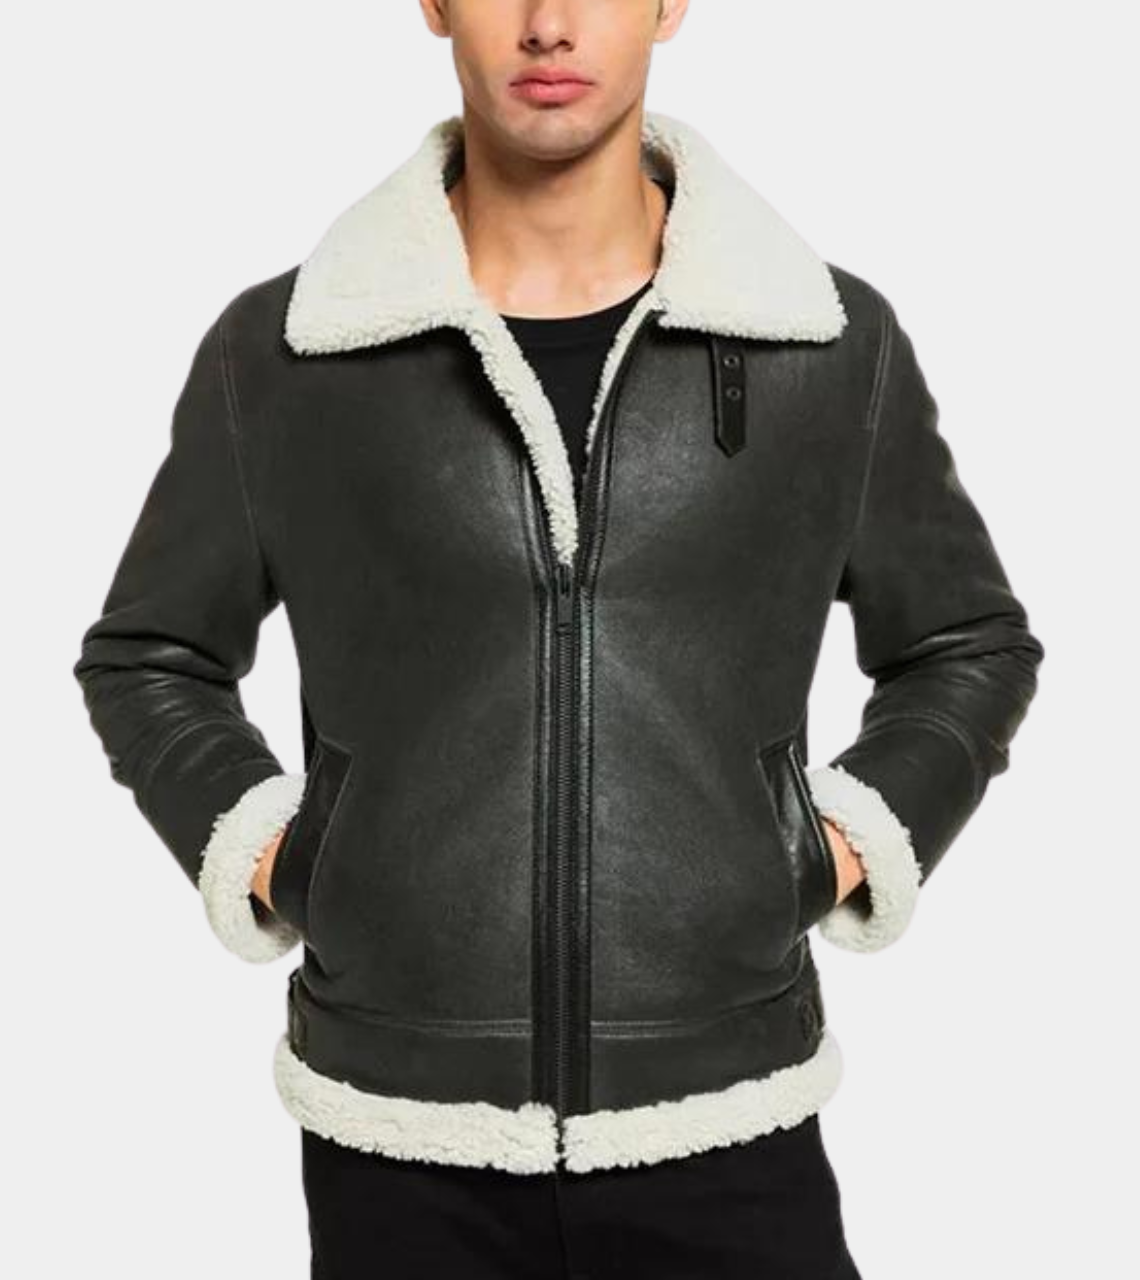 Men’s Black Leather Shearling Jacket